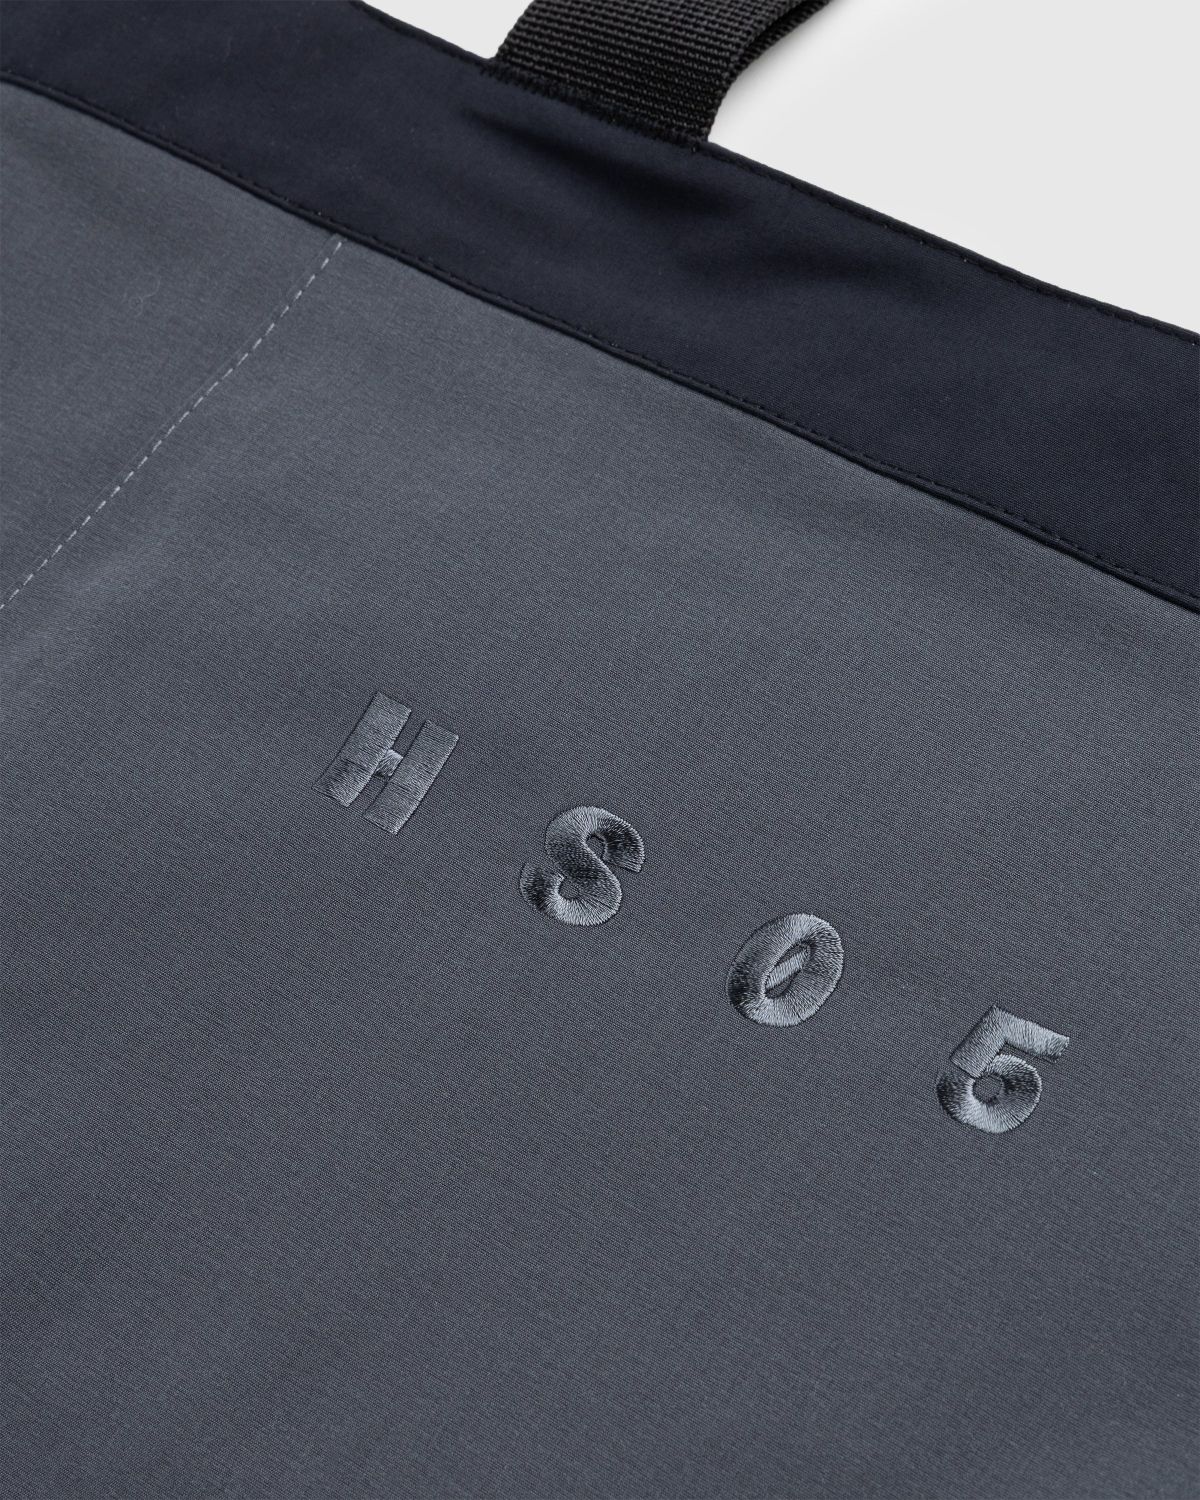 Highsnobiety HS05 – 3-Layer Nylon Tote Bag Black - Bags - Black - Image 5